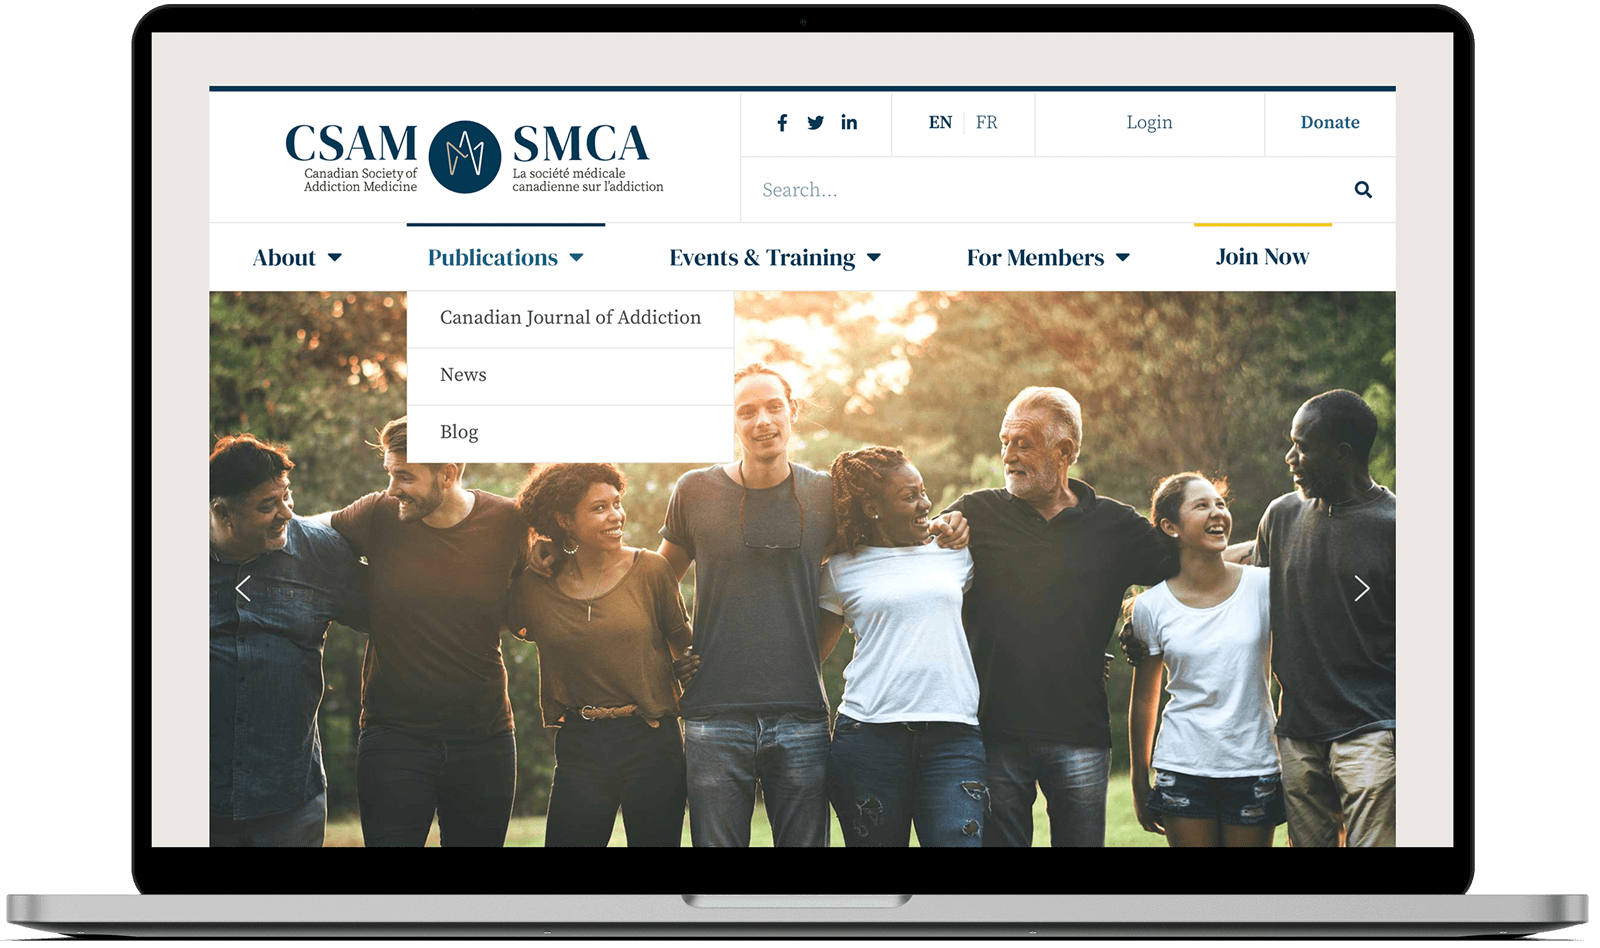 CSAM-SMCA Website Homepage Design